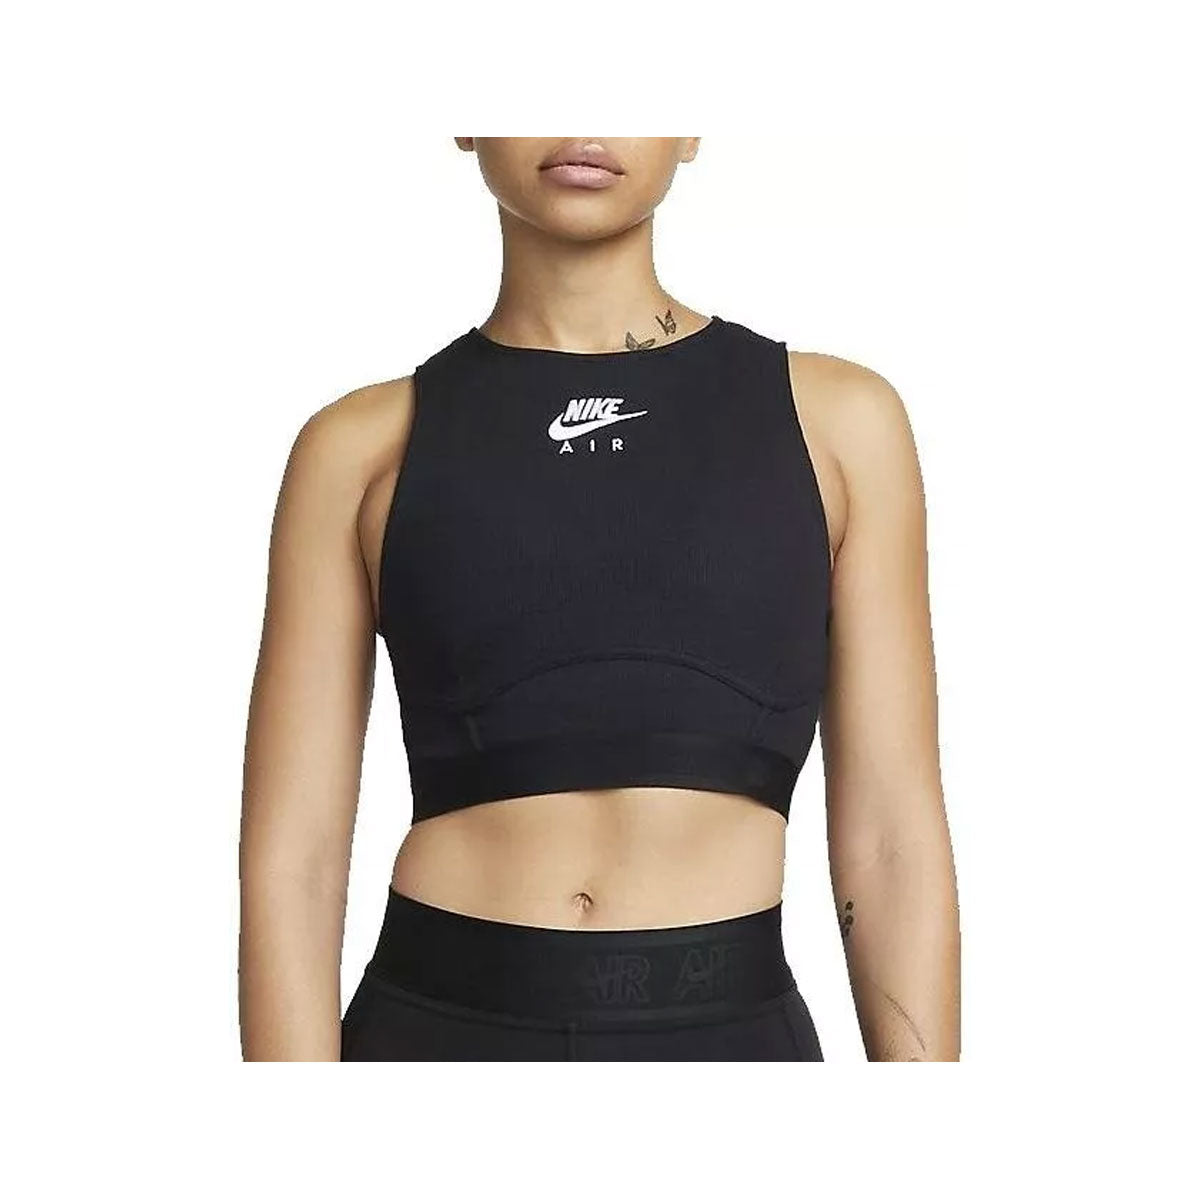 Nike Women's Air Black Ribbed Tank Top